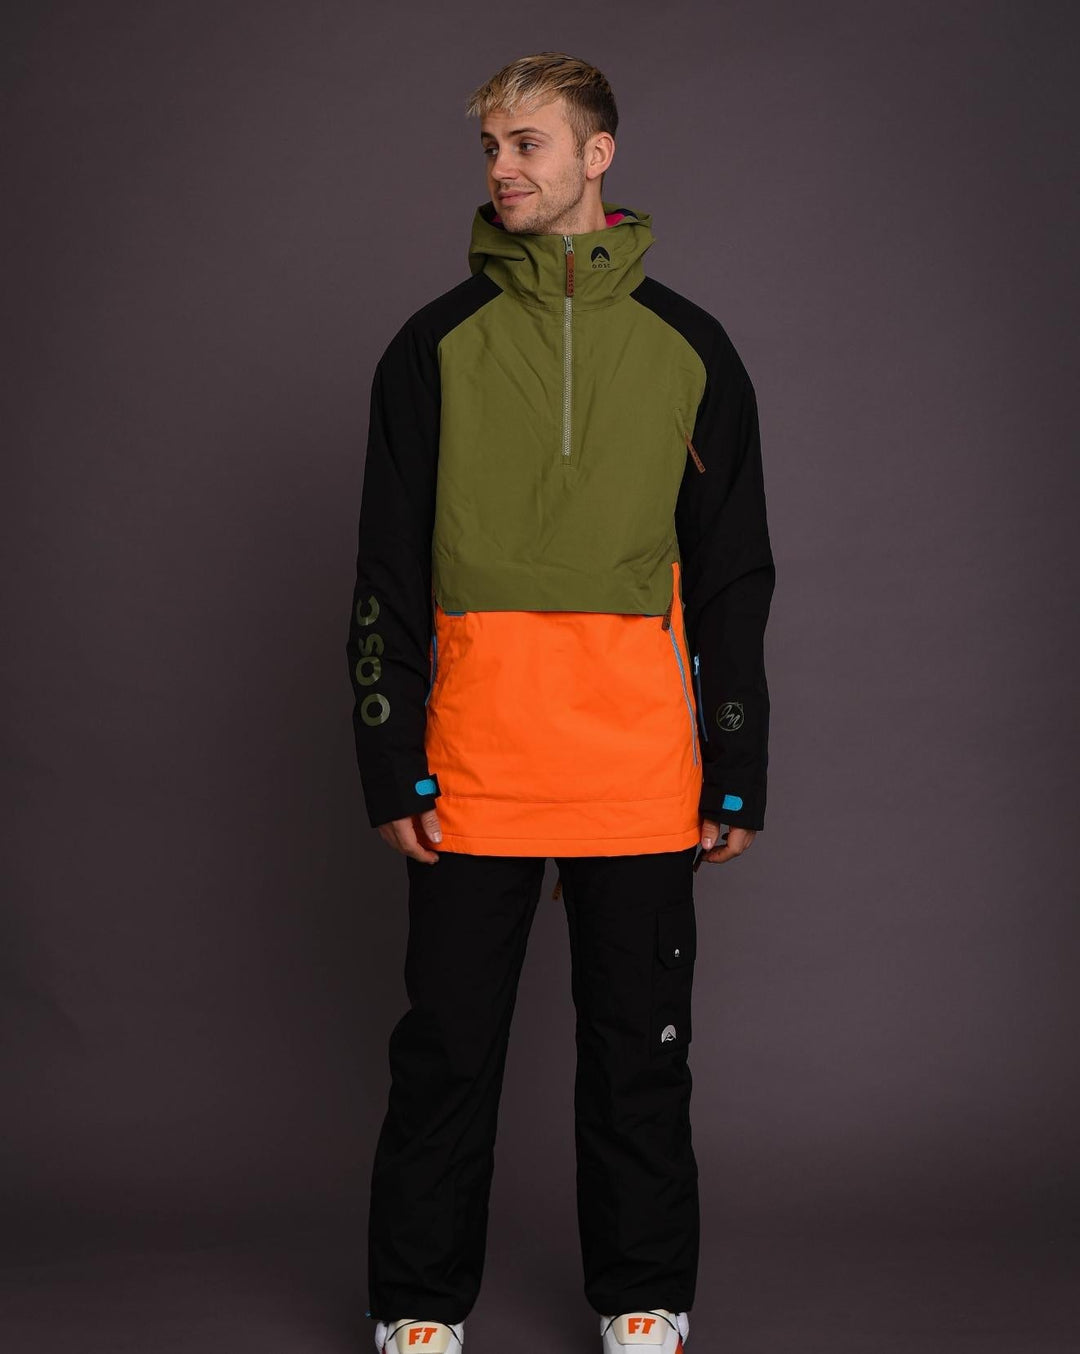 Snow Park Overhead Jacket - Orange & Khaki